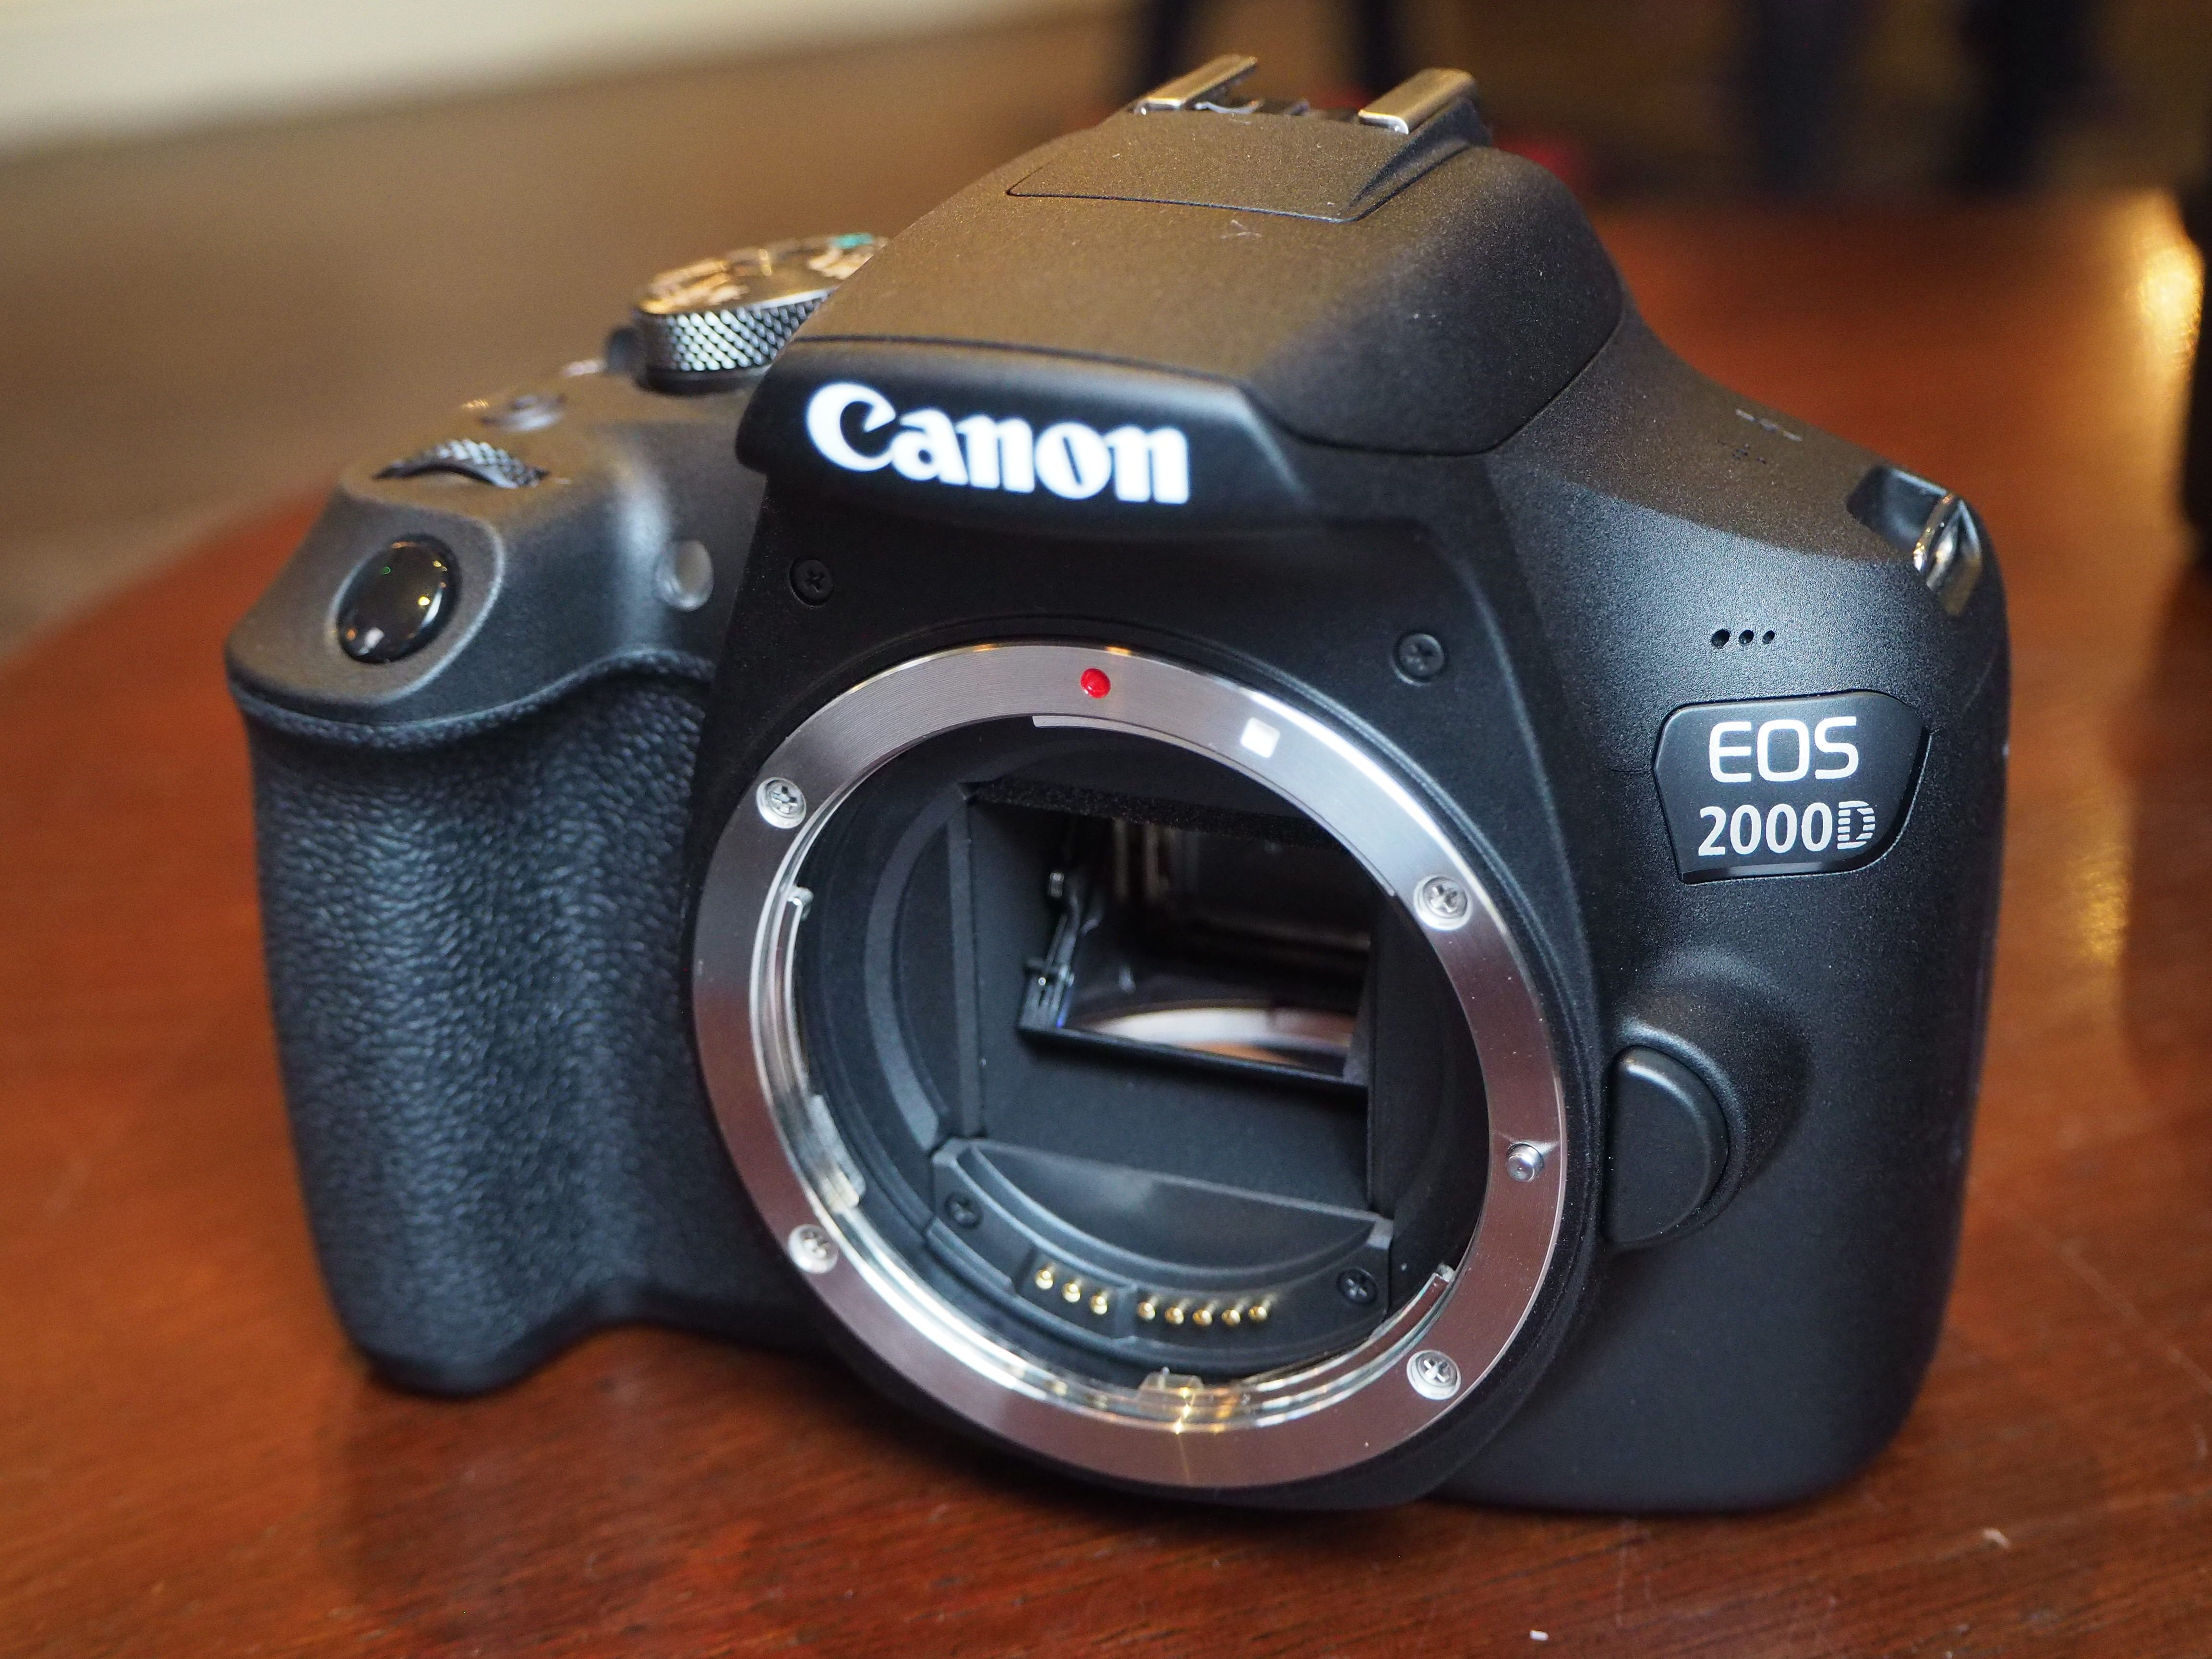 Canon EOS 2000D Review